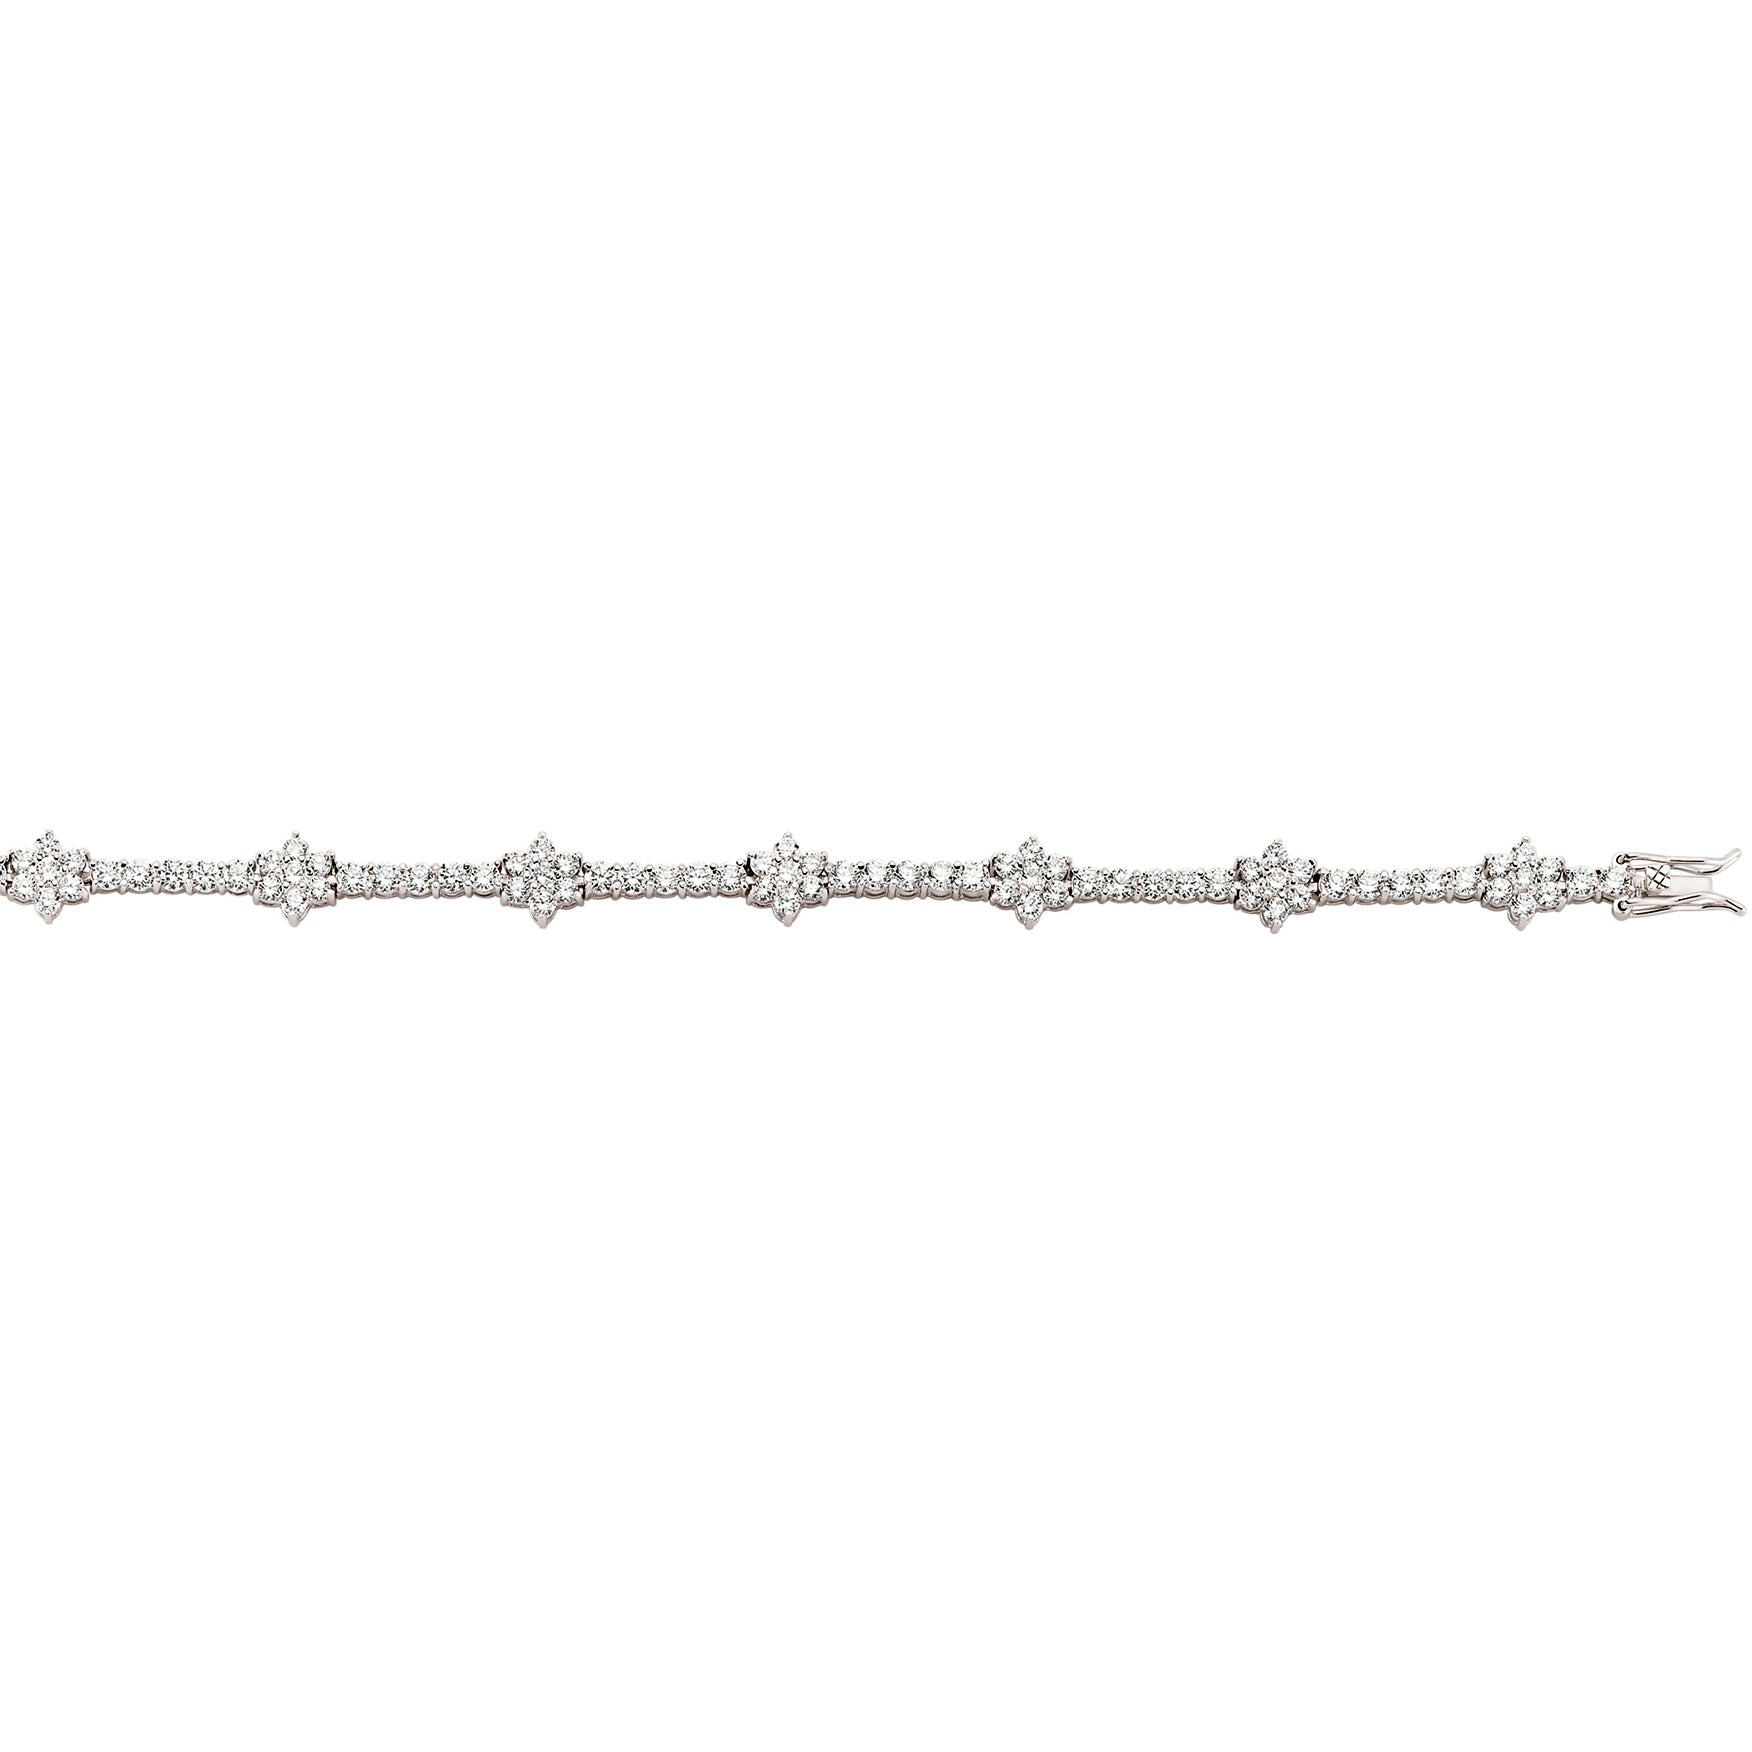 Silver  CZ Cluster Tennis Bracelet 9mm 7.5 inch - GVB086WH